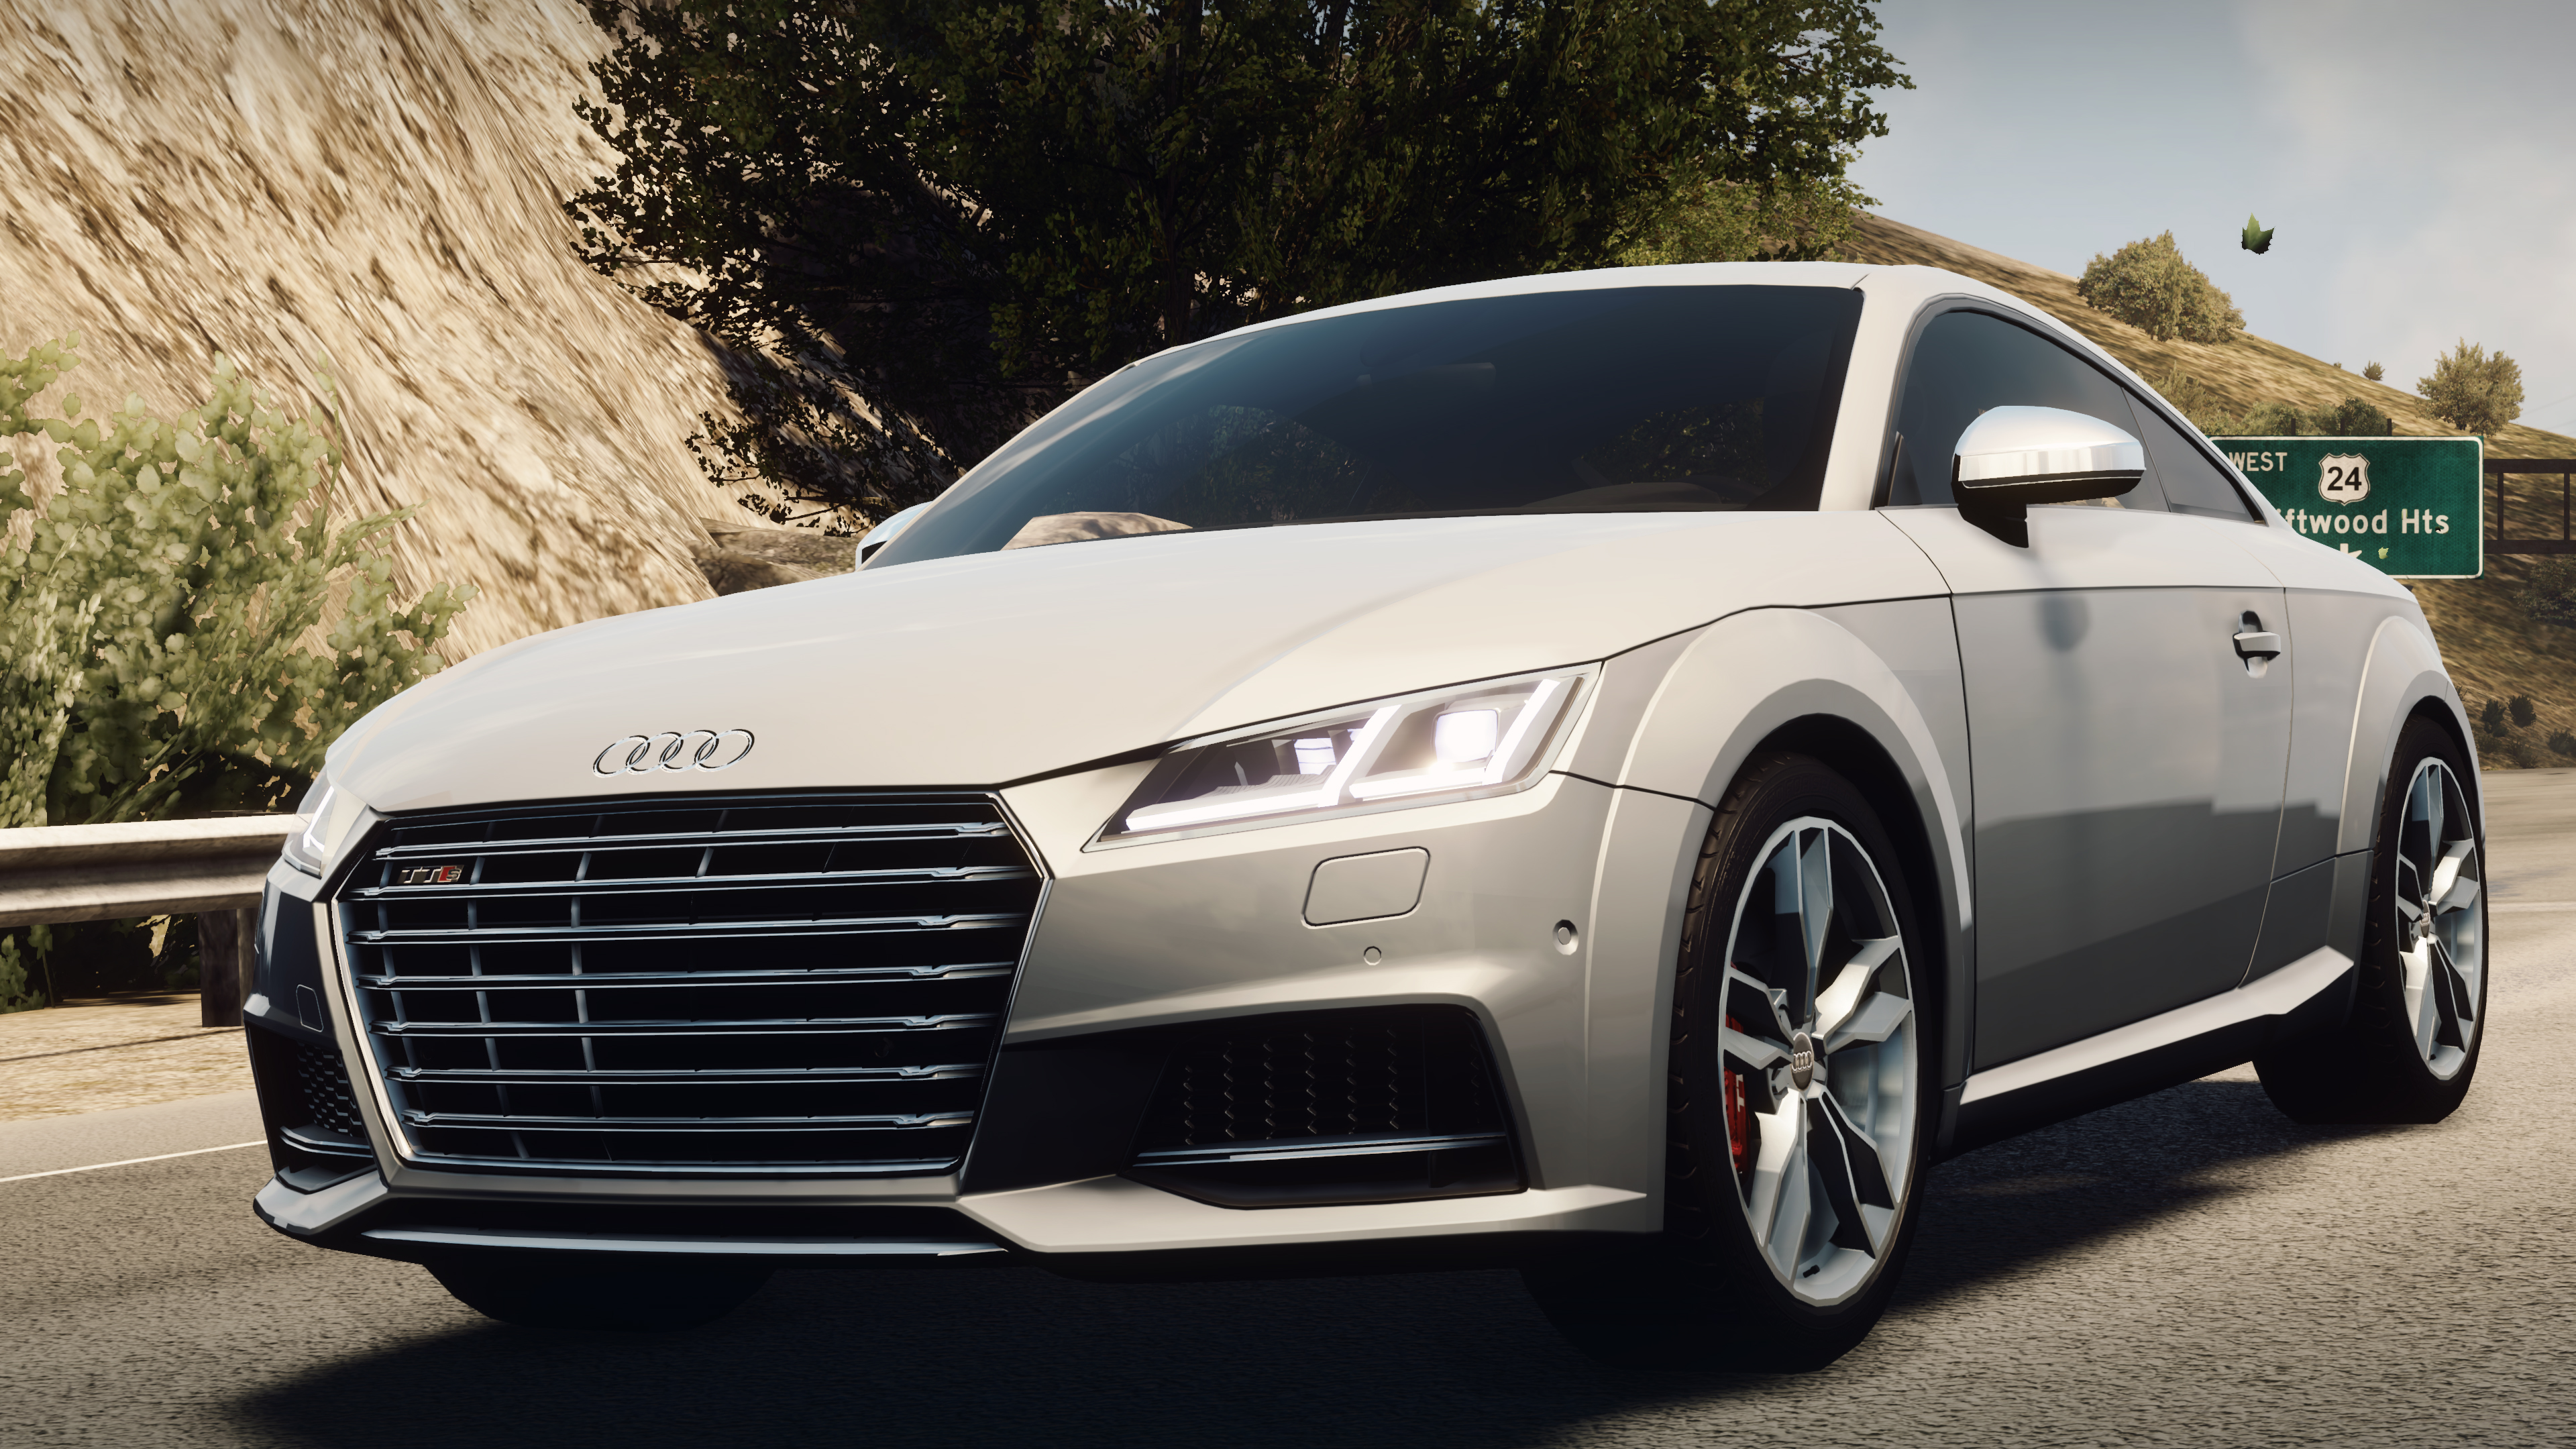 Audi TTS Coupé (8S) | Need for Speed Wiki | Fandom